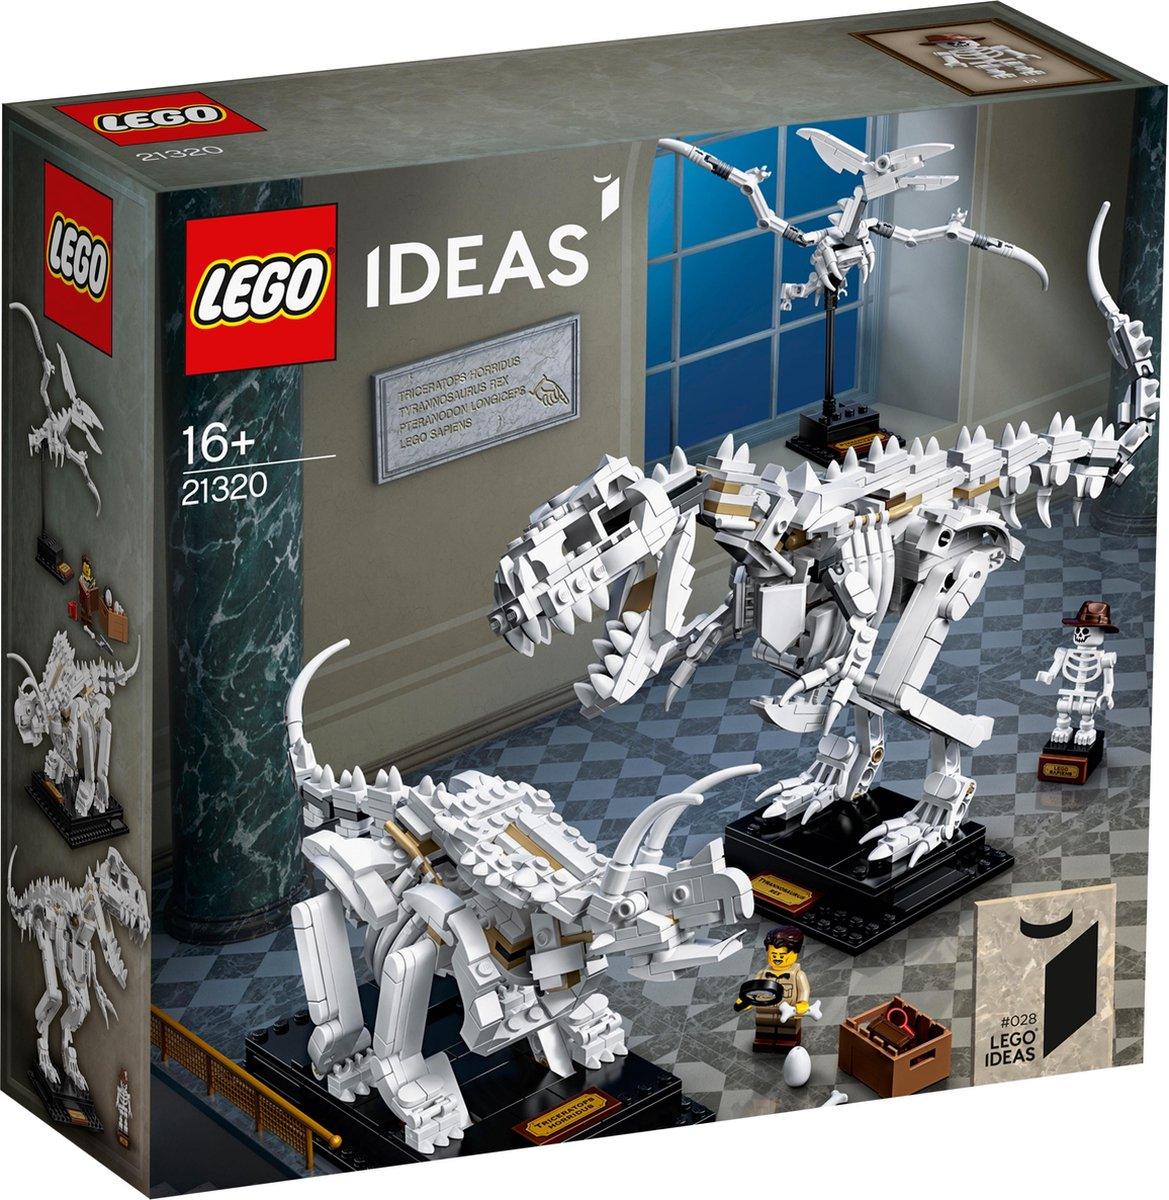 LEGO Dinosaurus fossielen 21320 Ideas | 2TTOYS ✓ Official shop<br>